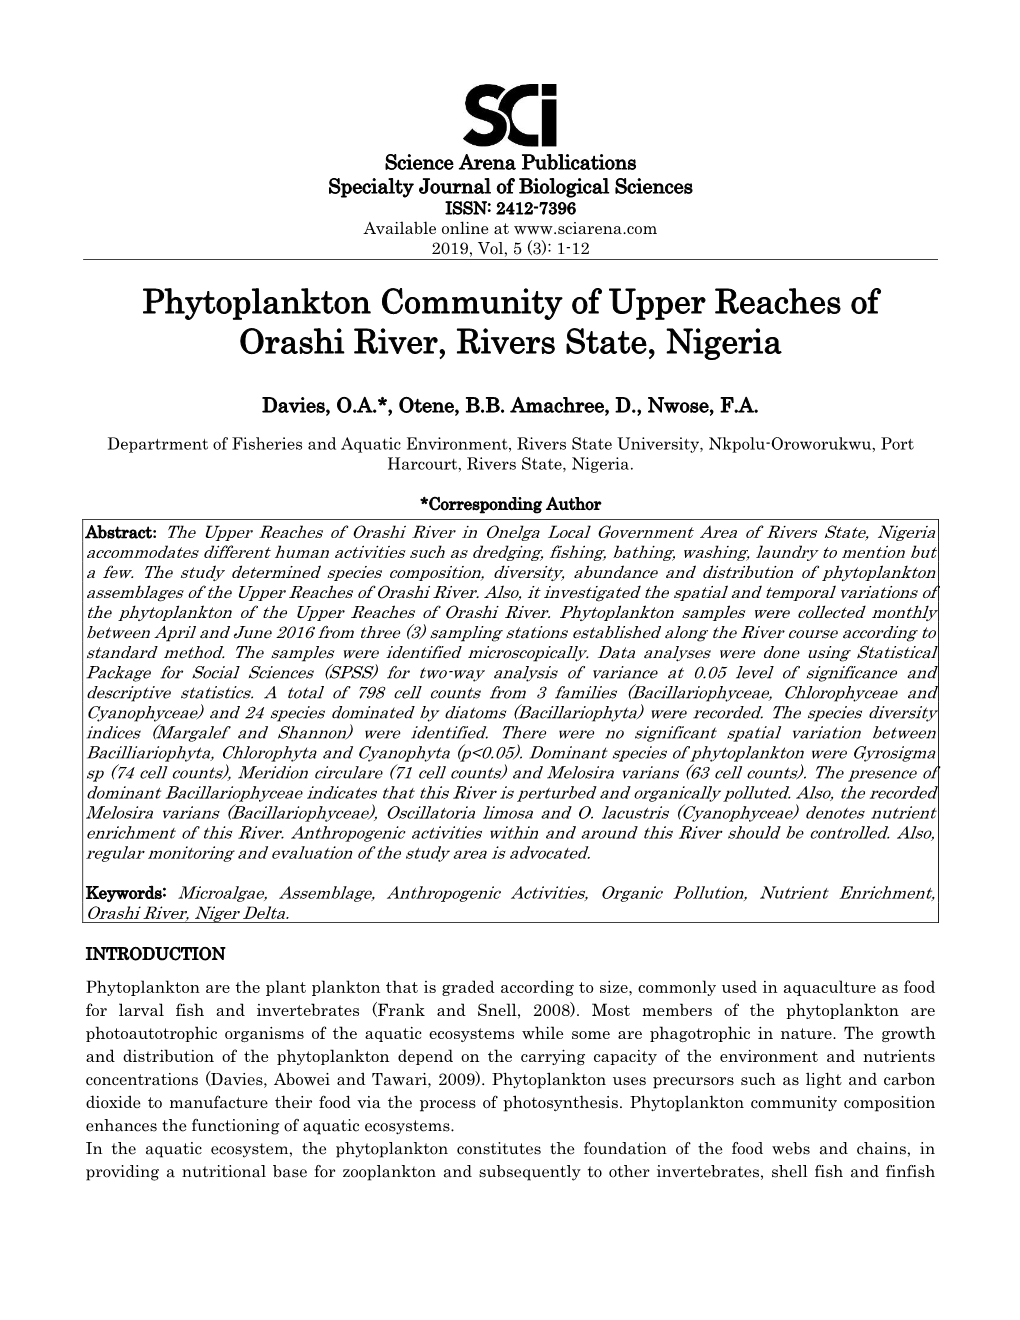 Phytoplankton Community of Upper Reaches of Orashi River, Rivers State, Nigeria